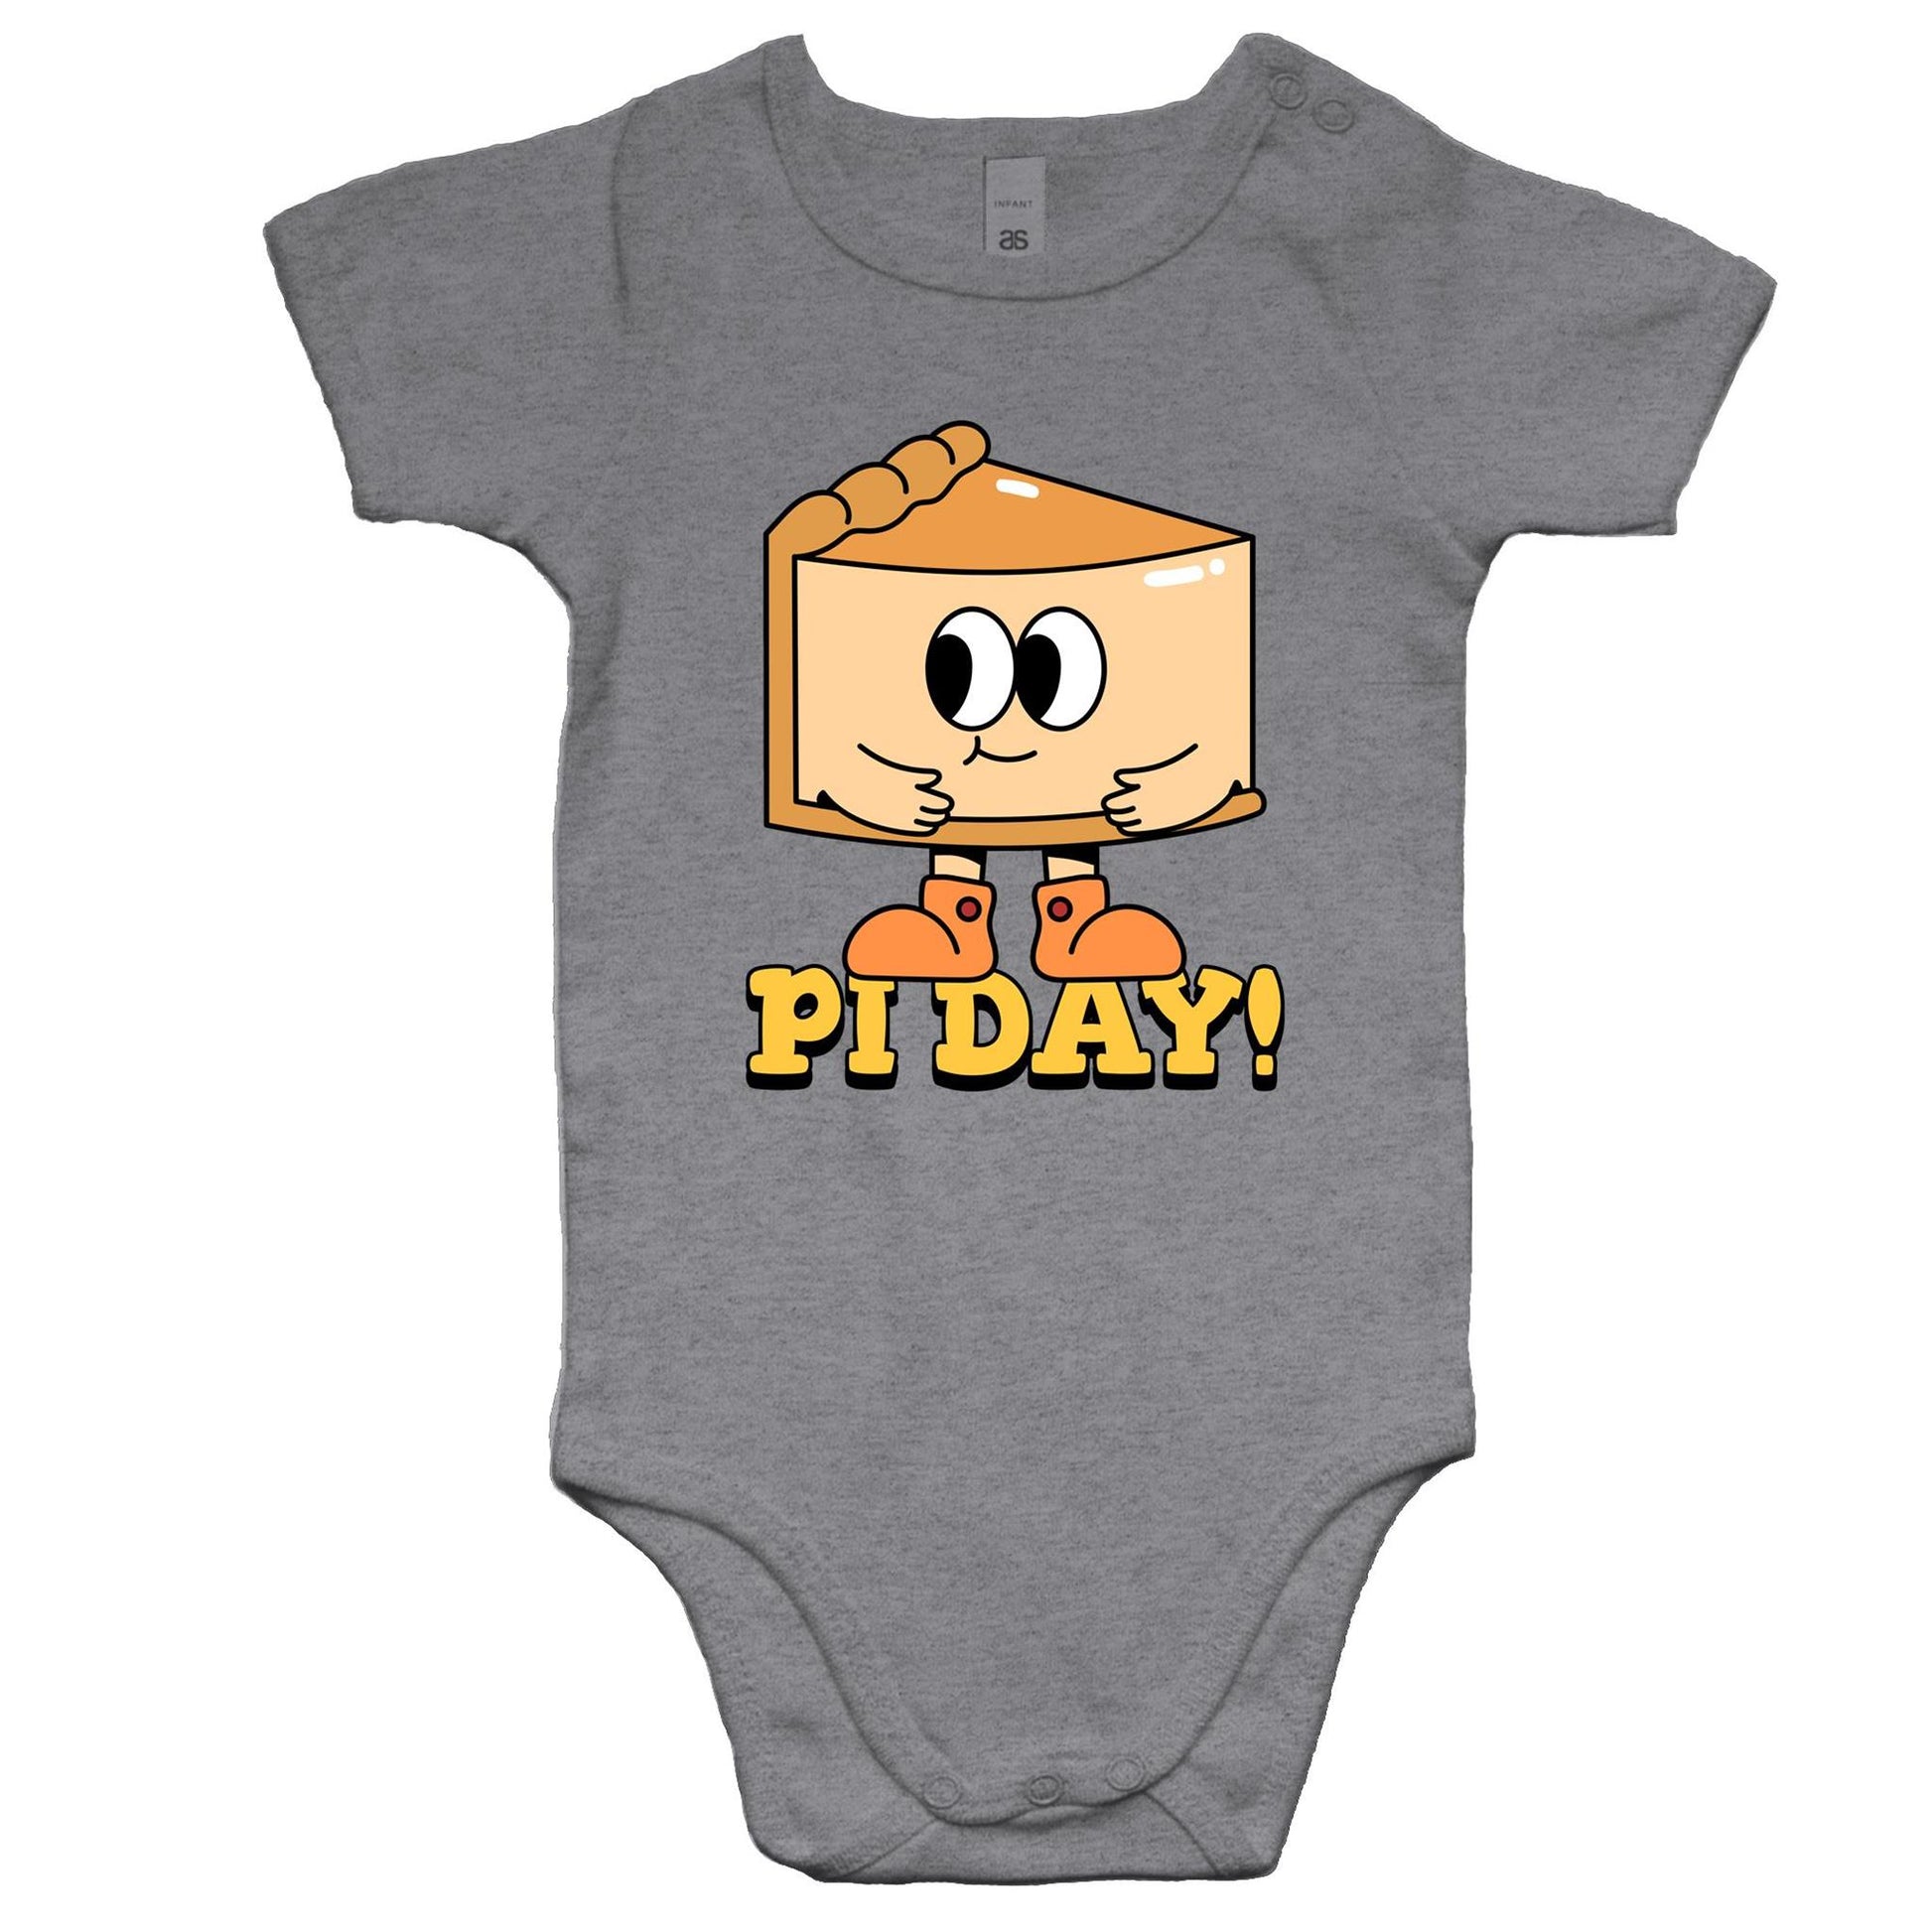 Pi Day - Baby Bodysuit Grey Marle Baby Bodysuit Maths Science